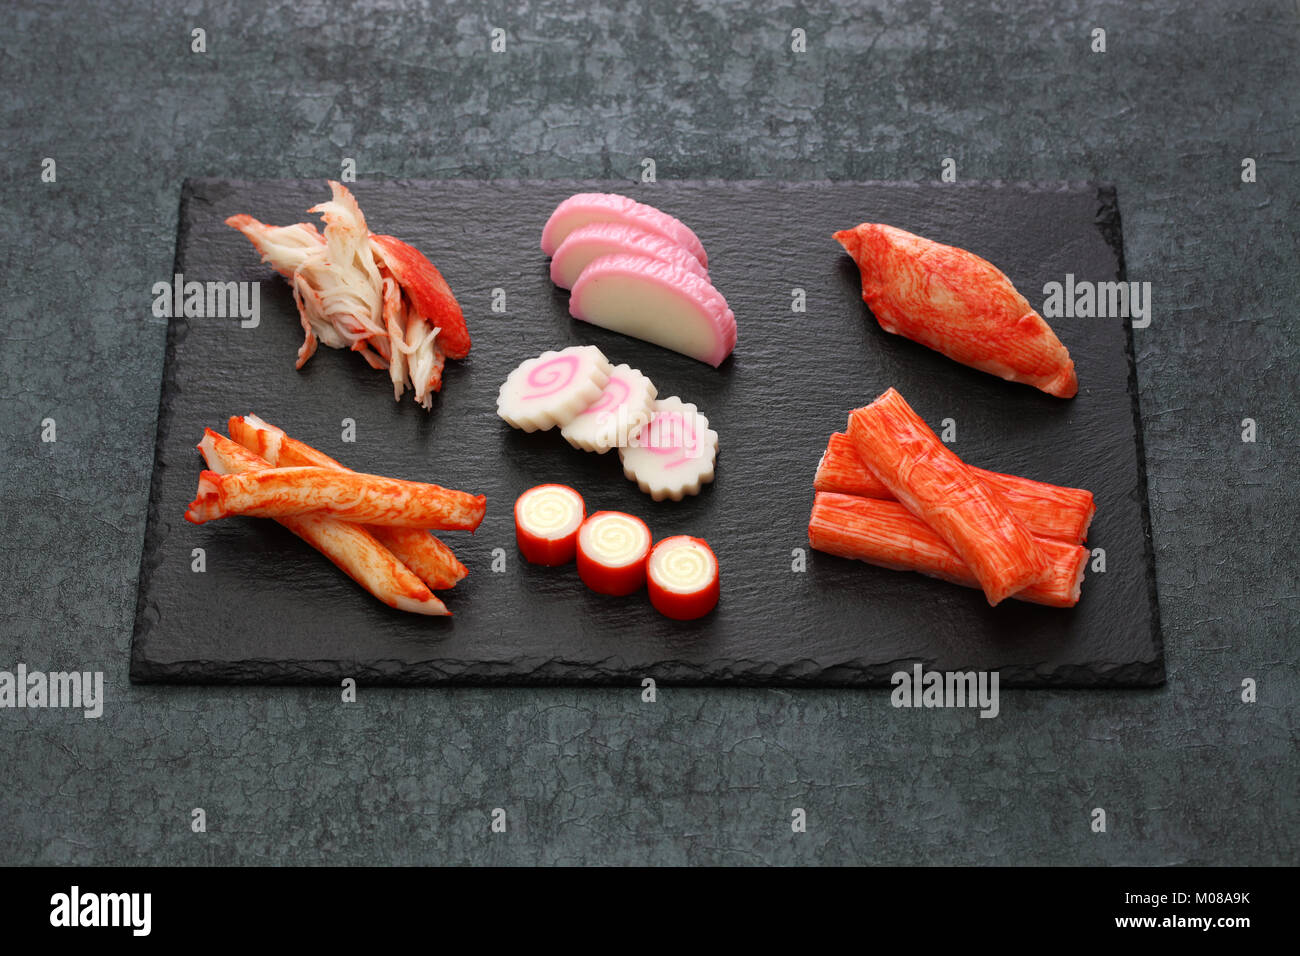 variety of surimi products, imitation crab sticks, japanese food Stock Photo